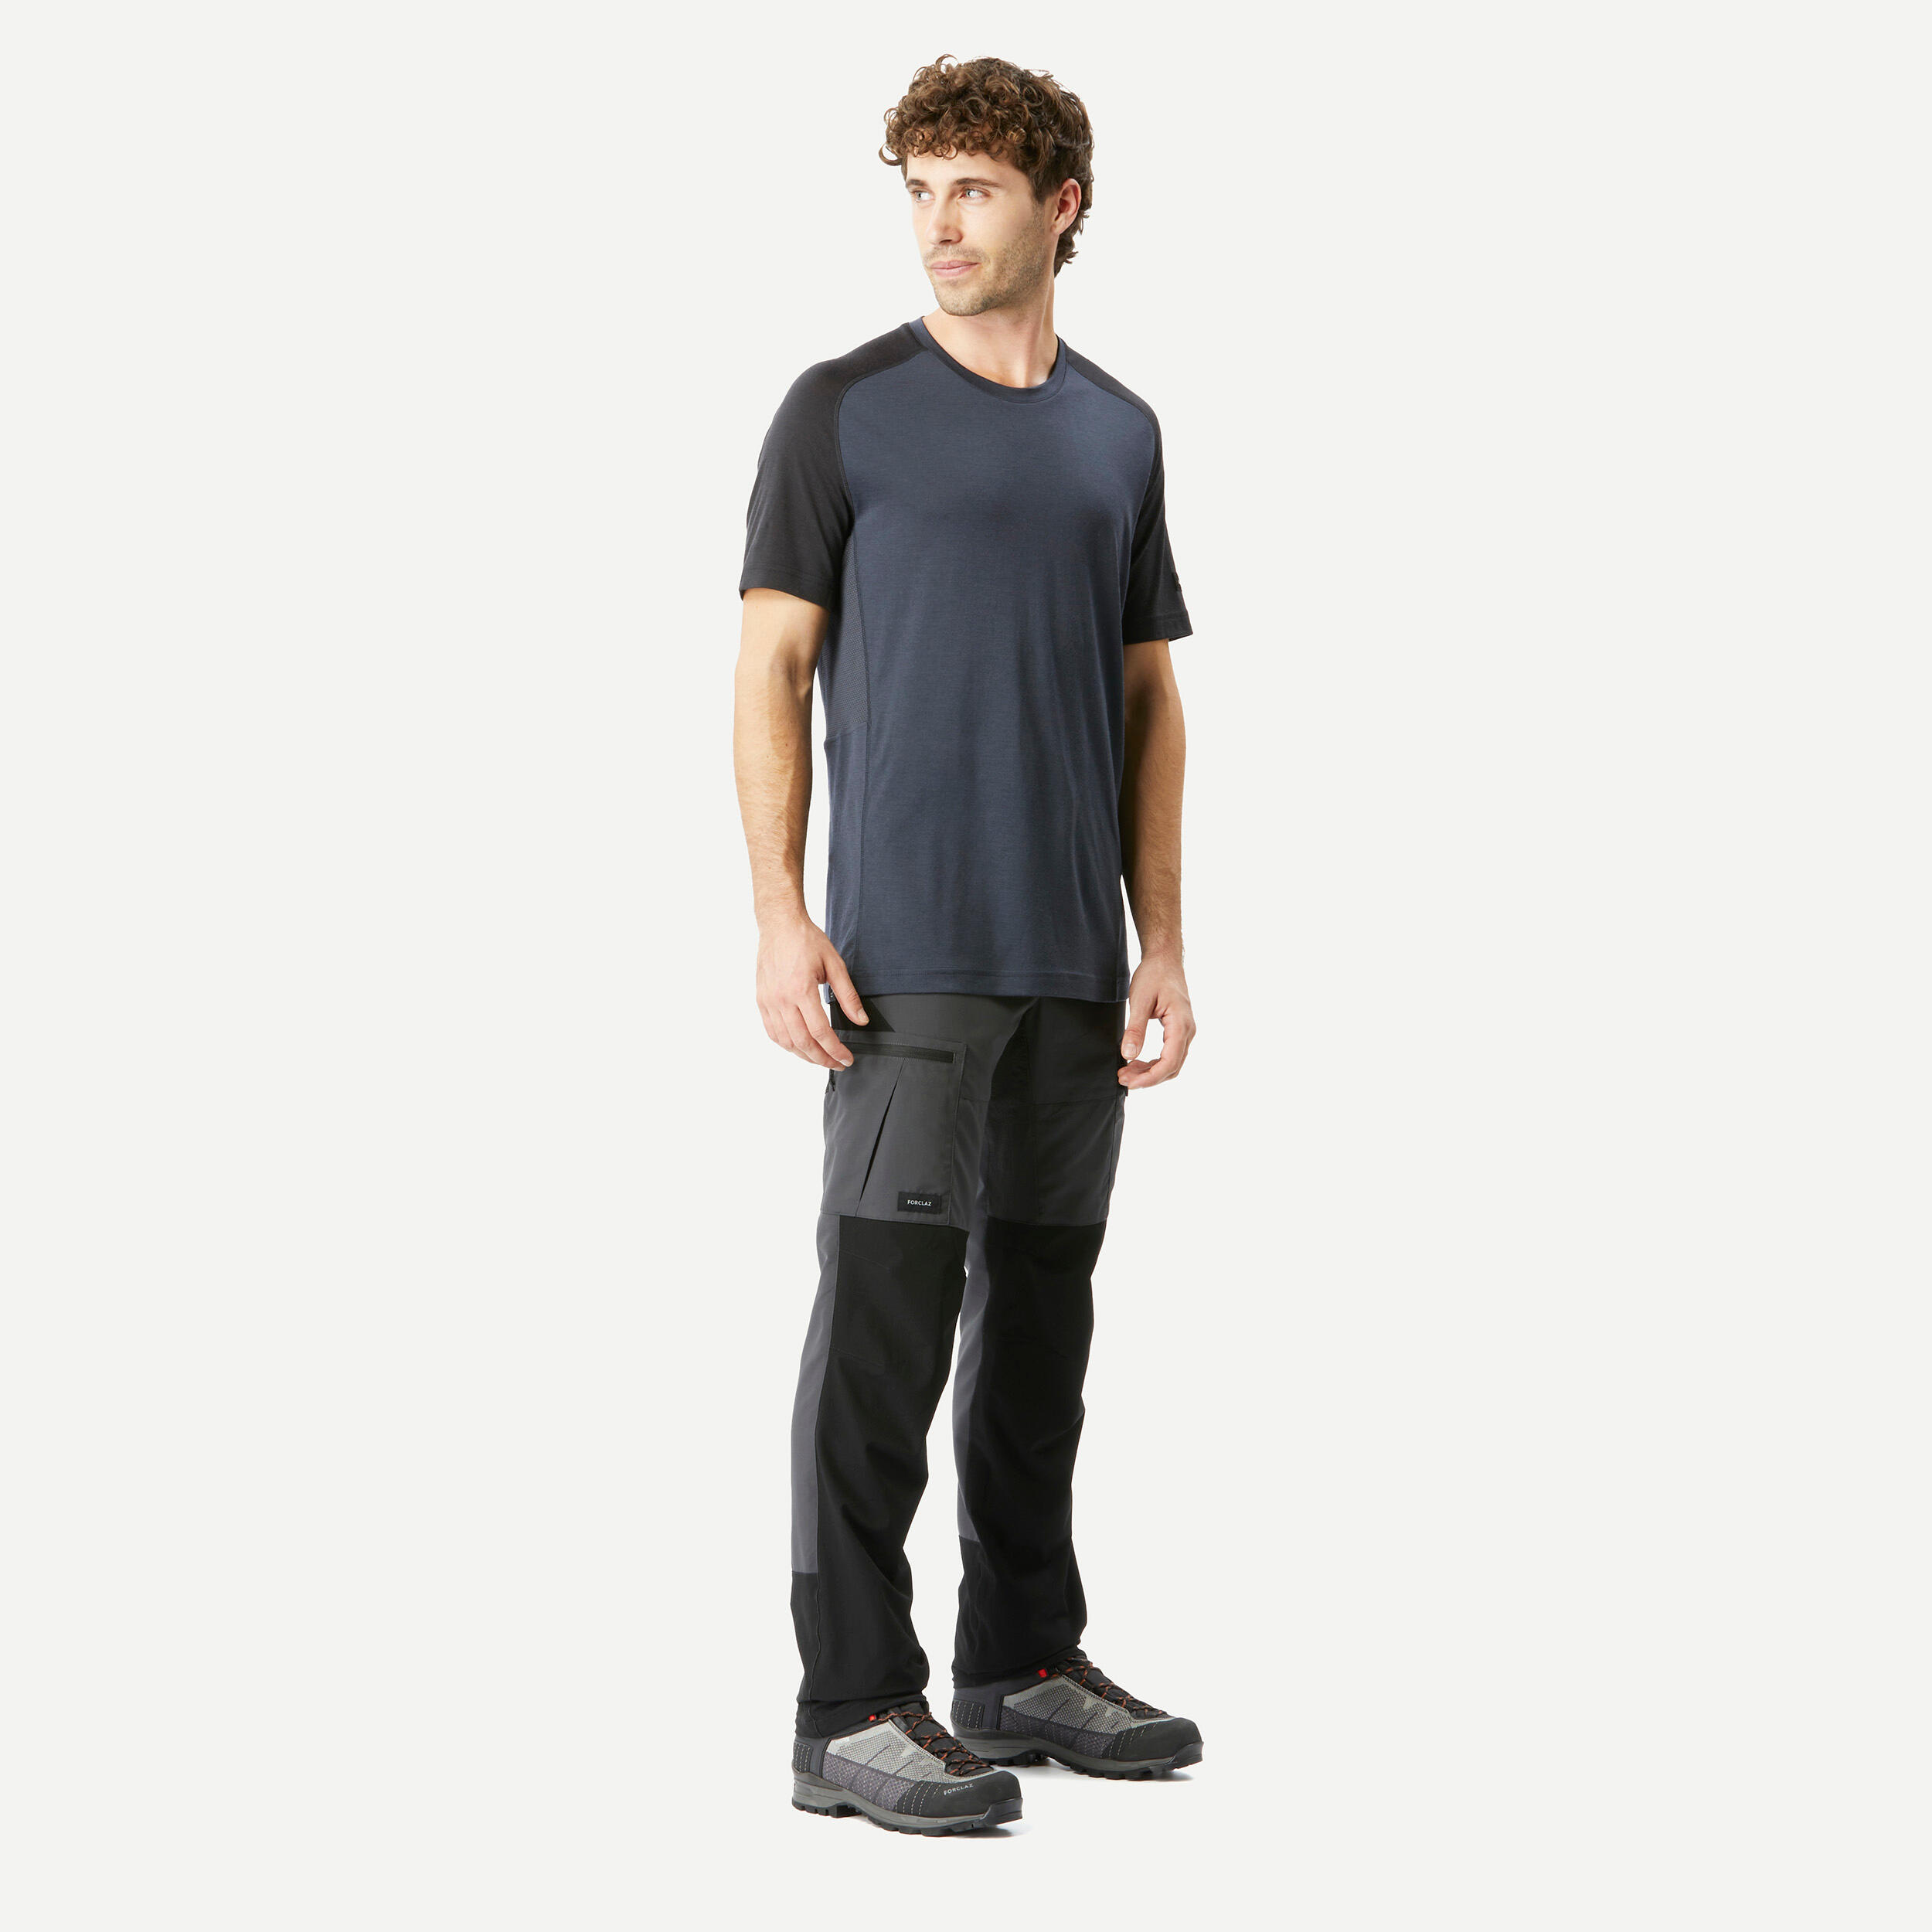 Men's Merino Wool Base Layer Tights - MT 500 - Black - Forclaz